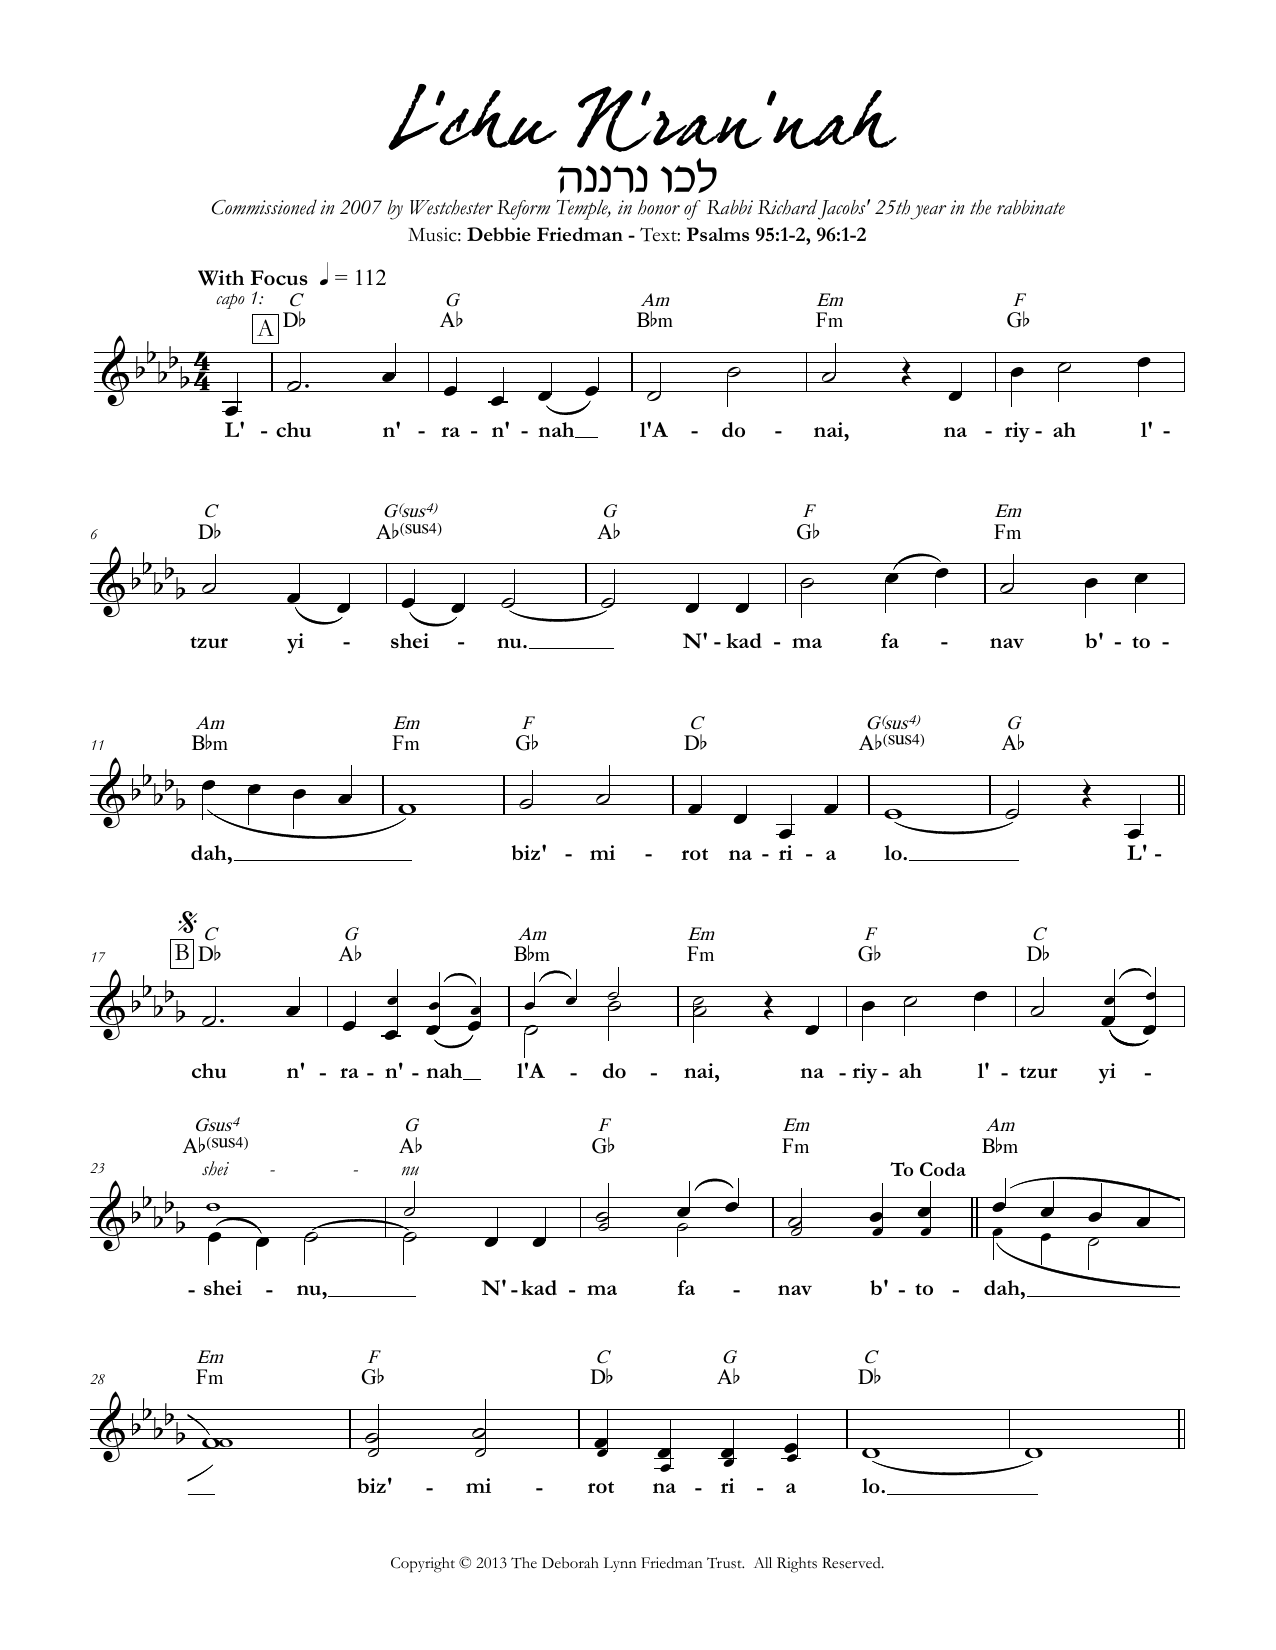 Download Debbie Friedman L'chu N'ran'nah Sheet Music and learn how to play Lead Sheet / Fake Book PDF digital score in minutes